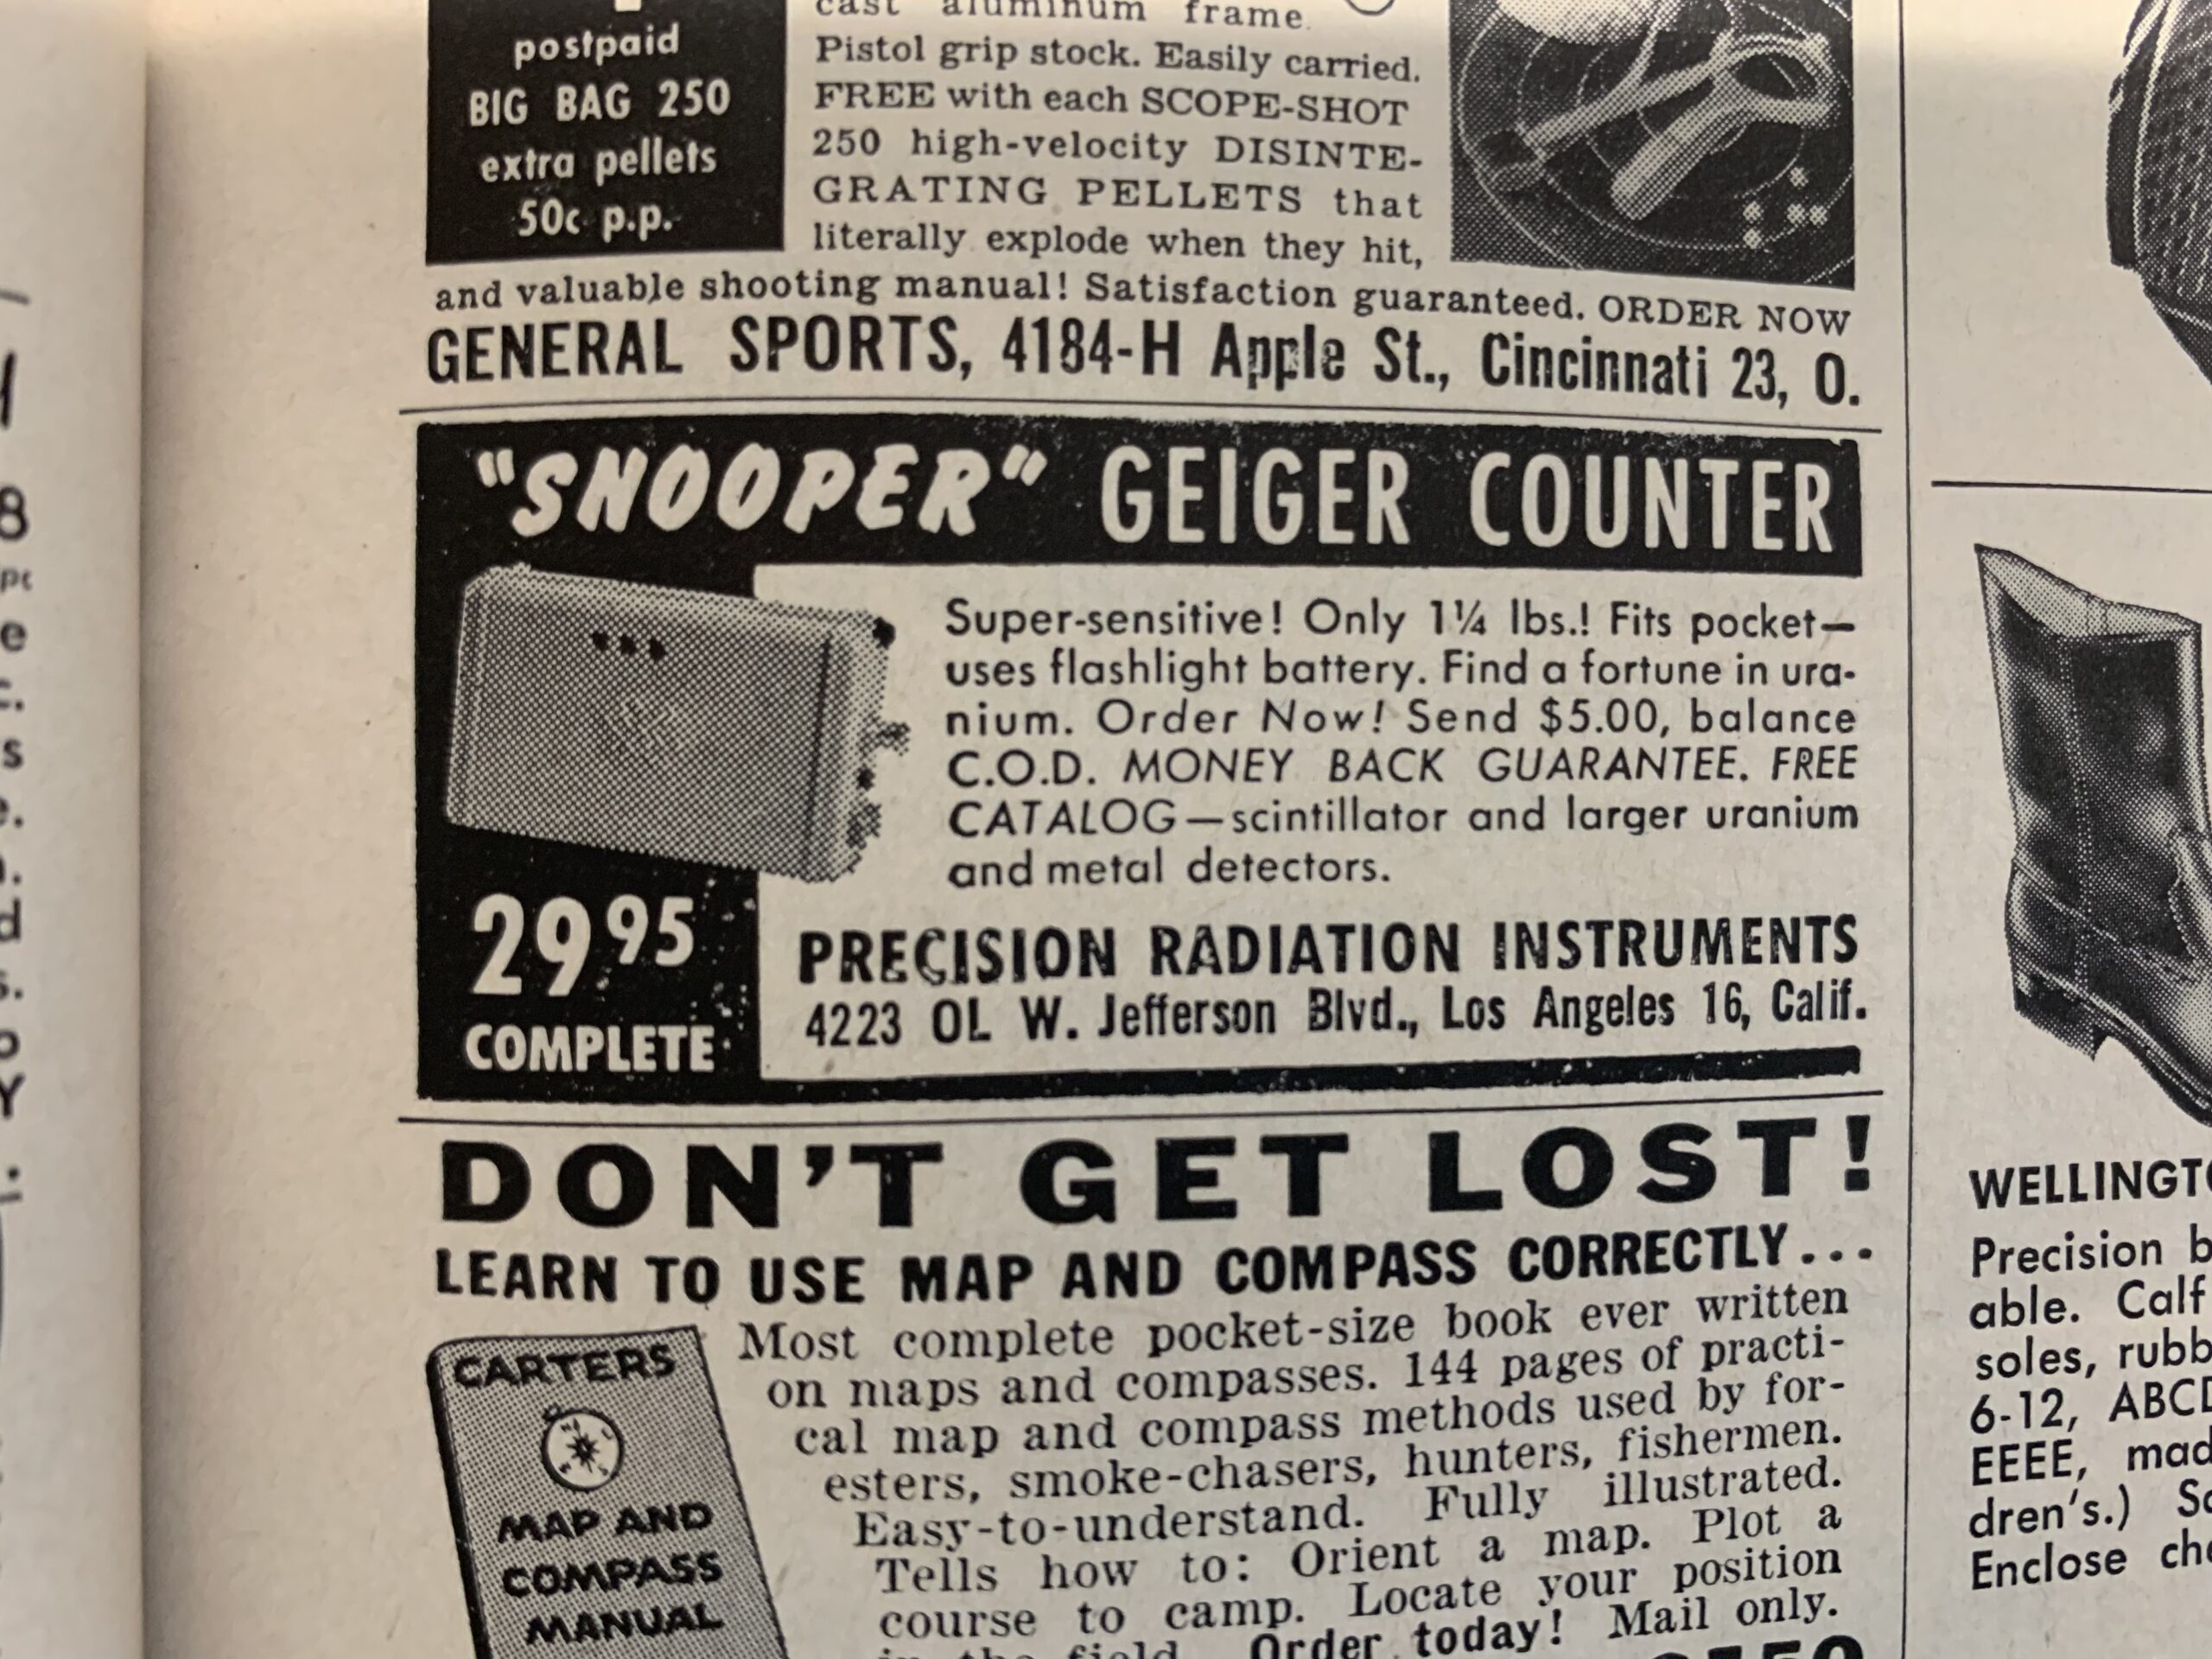 Vintage ad for geiger counter